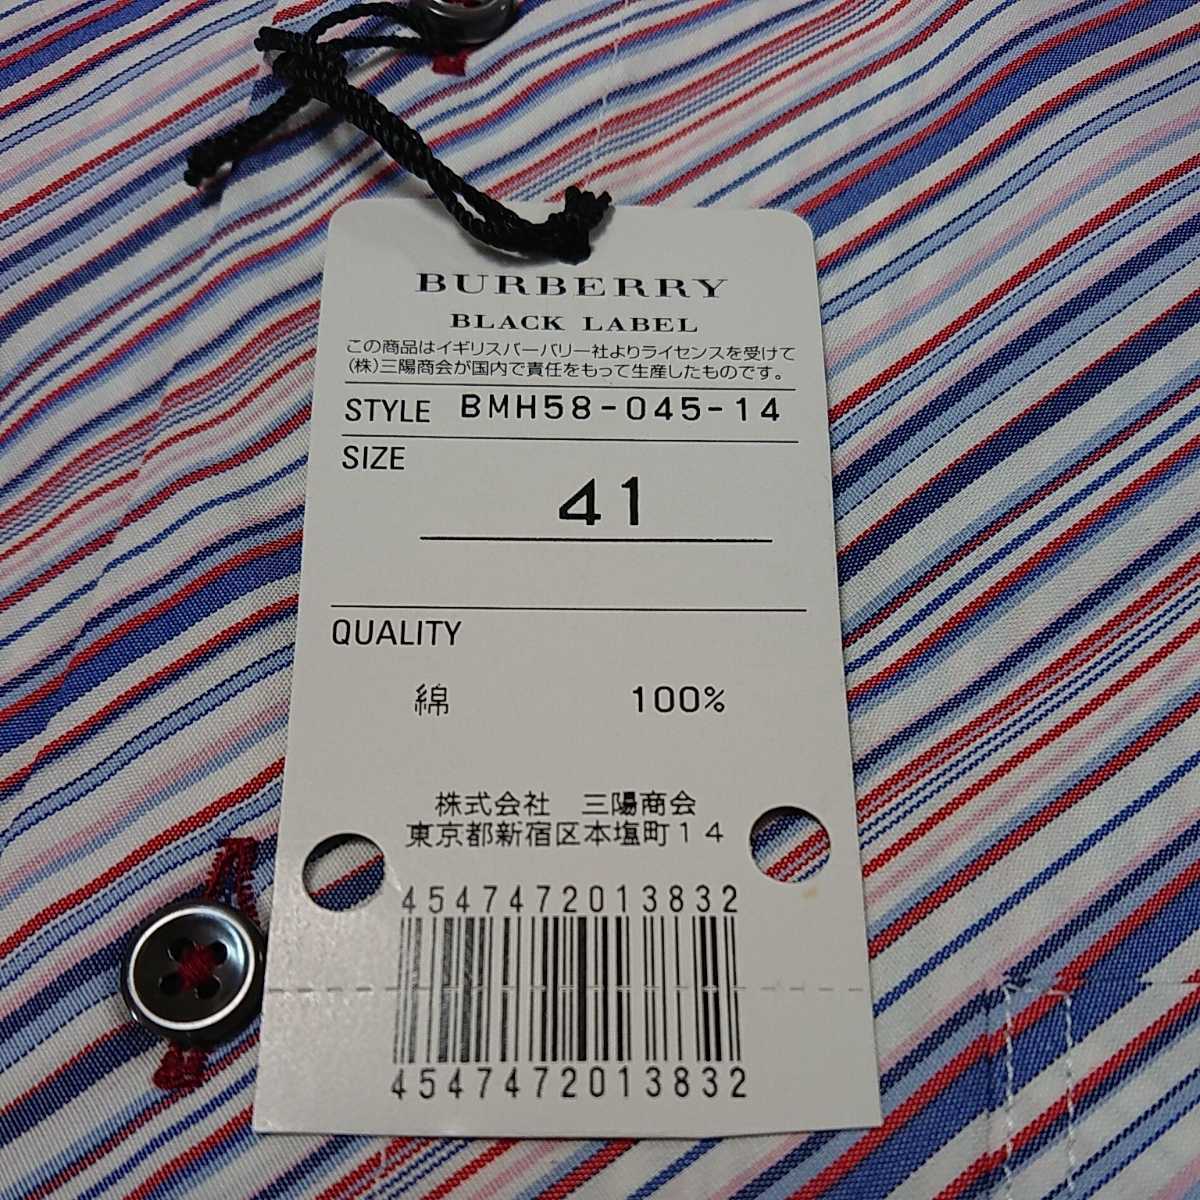 [ new goods unused ]BURBERRY BLACKLABEL Burberry Black Label long sleeve shirt size L(41) bias stripe specification tricolor 